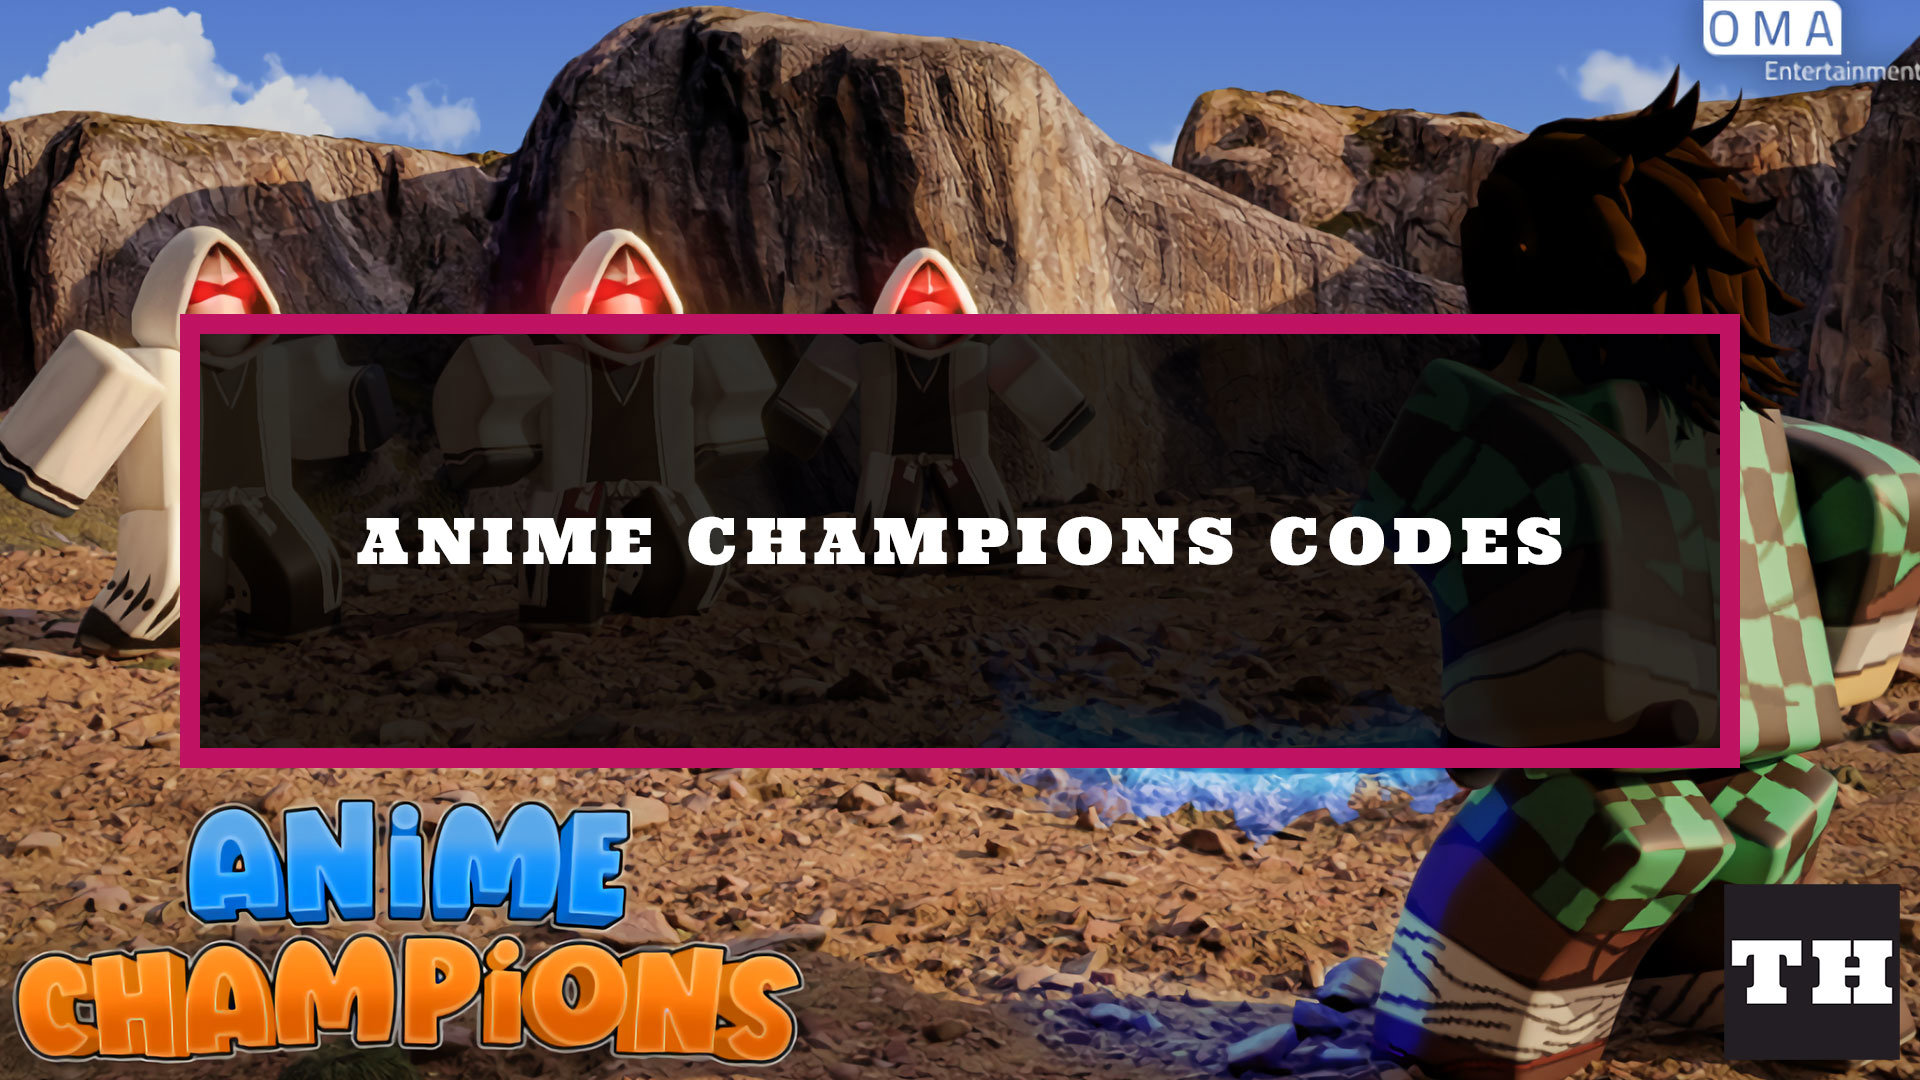 Anime Champions Simulator codes December 2023